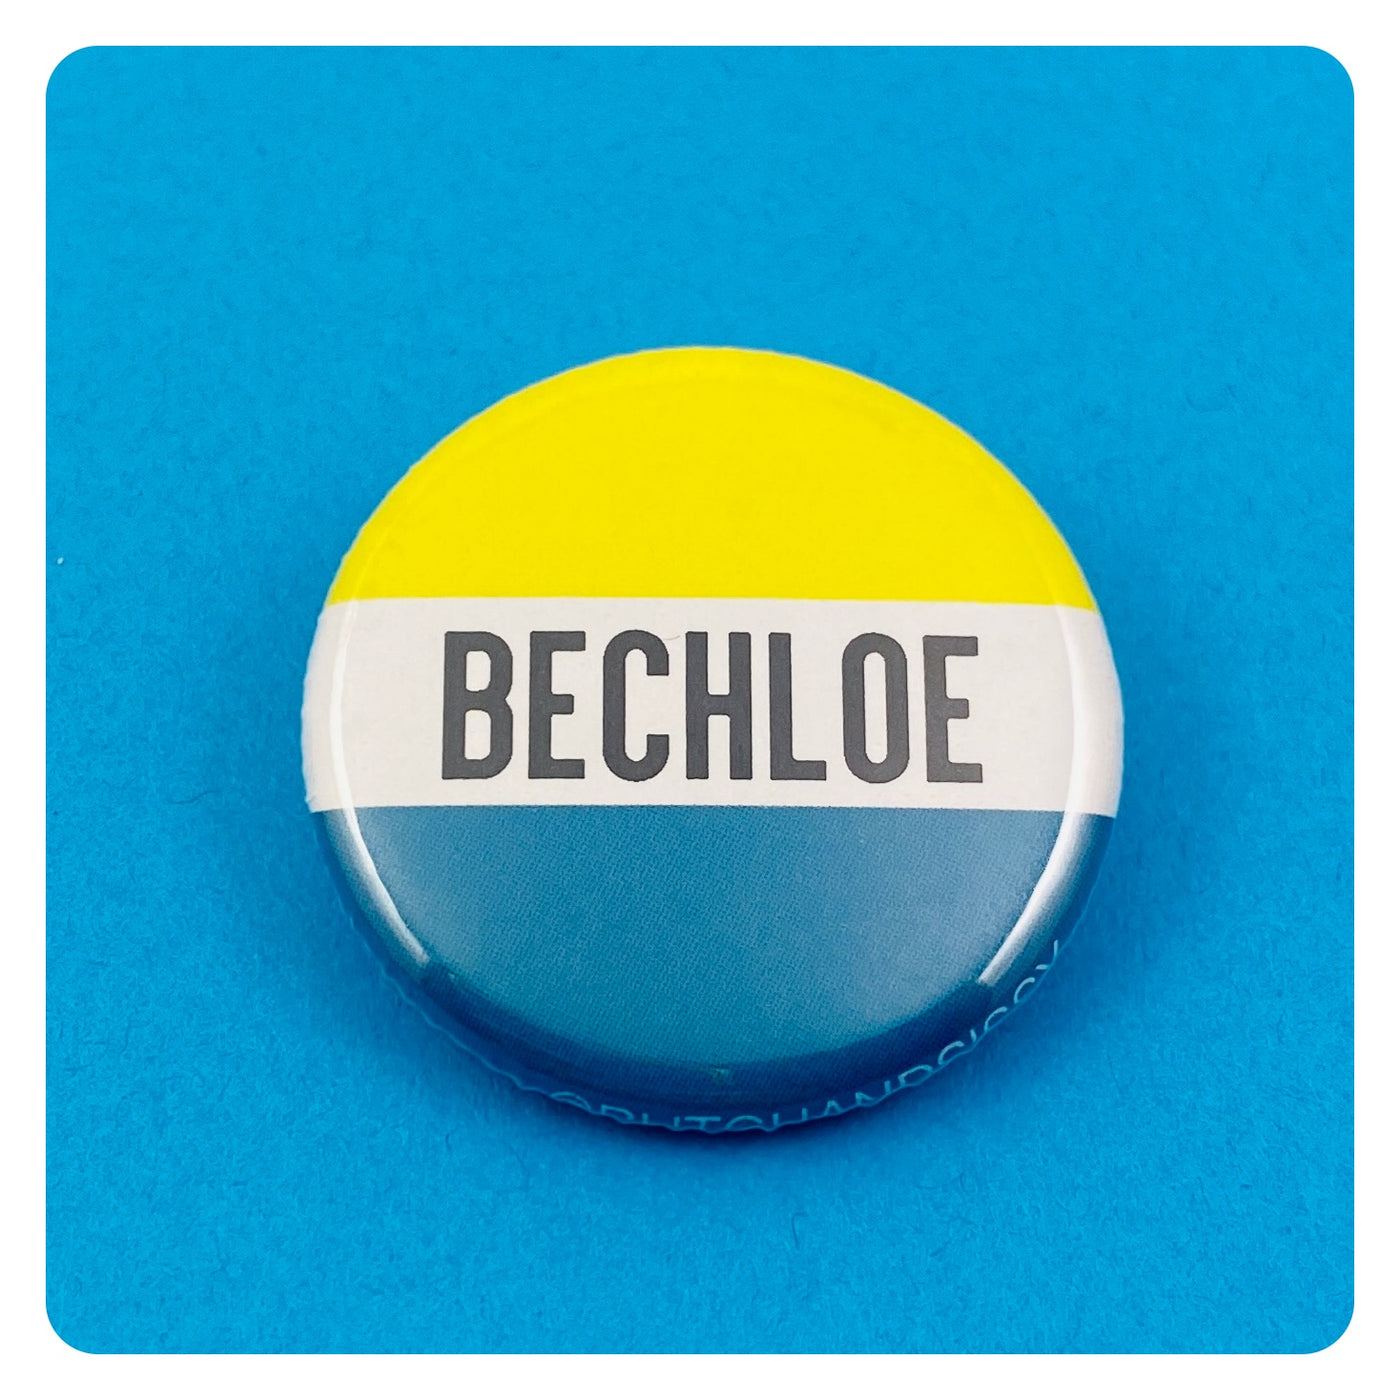 Bechloe Ship Button